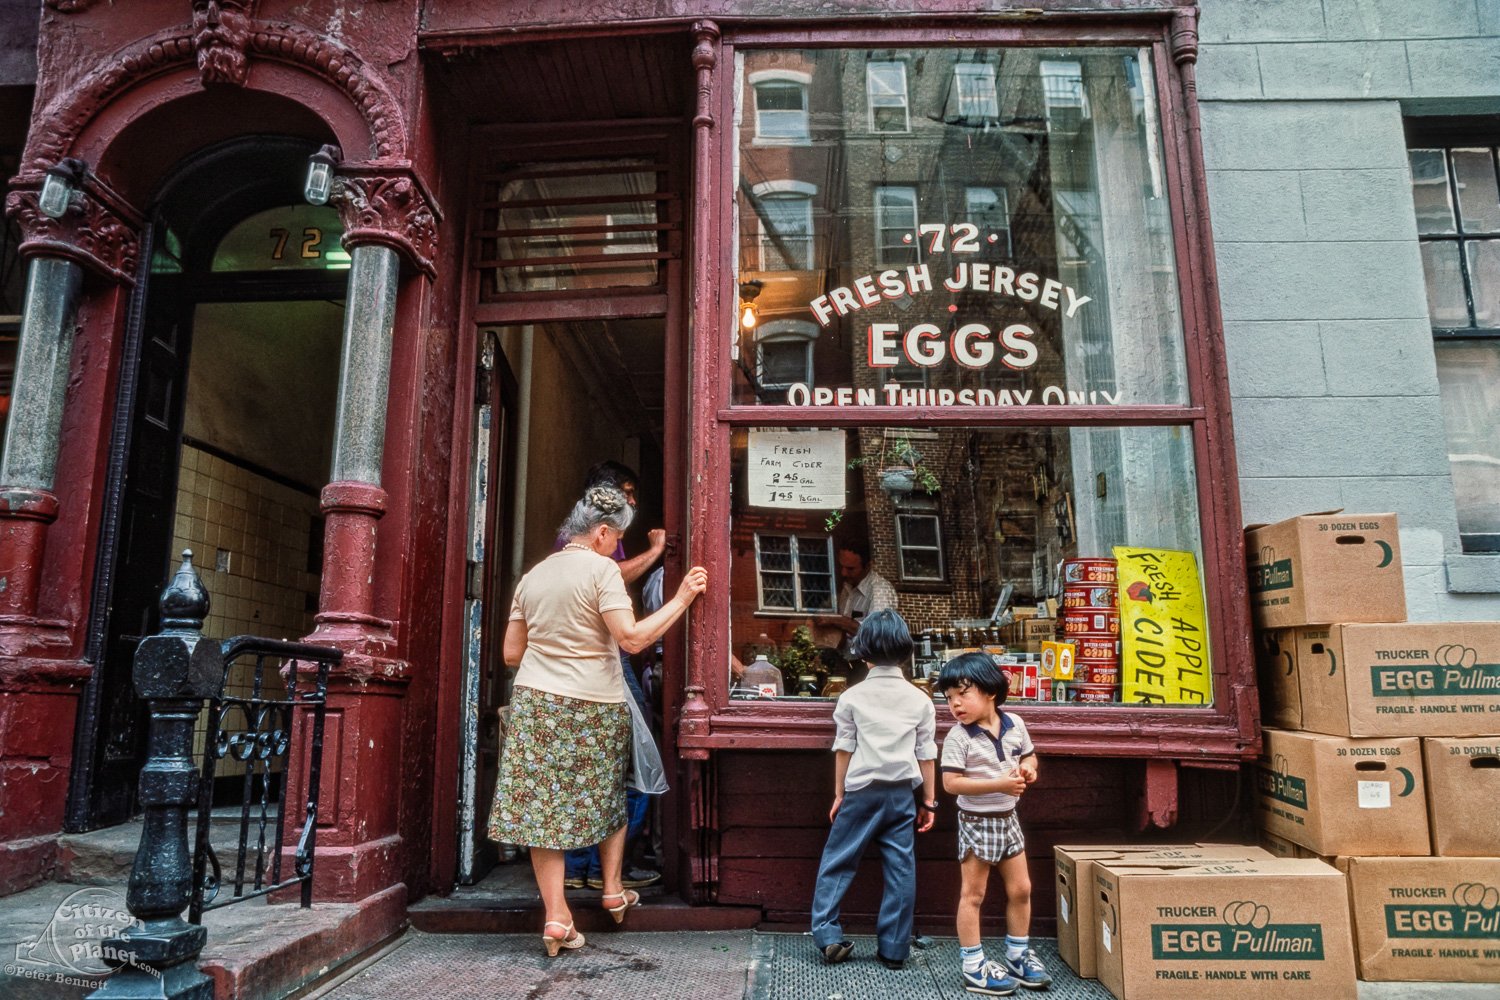  Fresh Jersey Eggs, Thursday Only, East 7th Street 